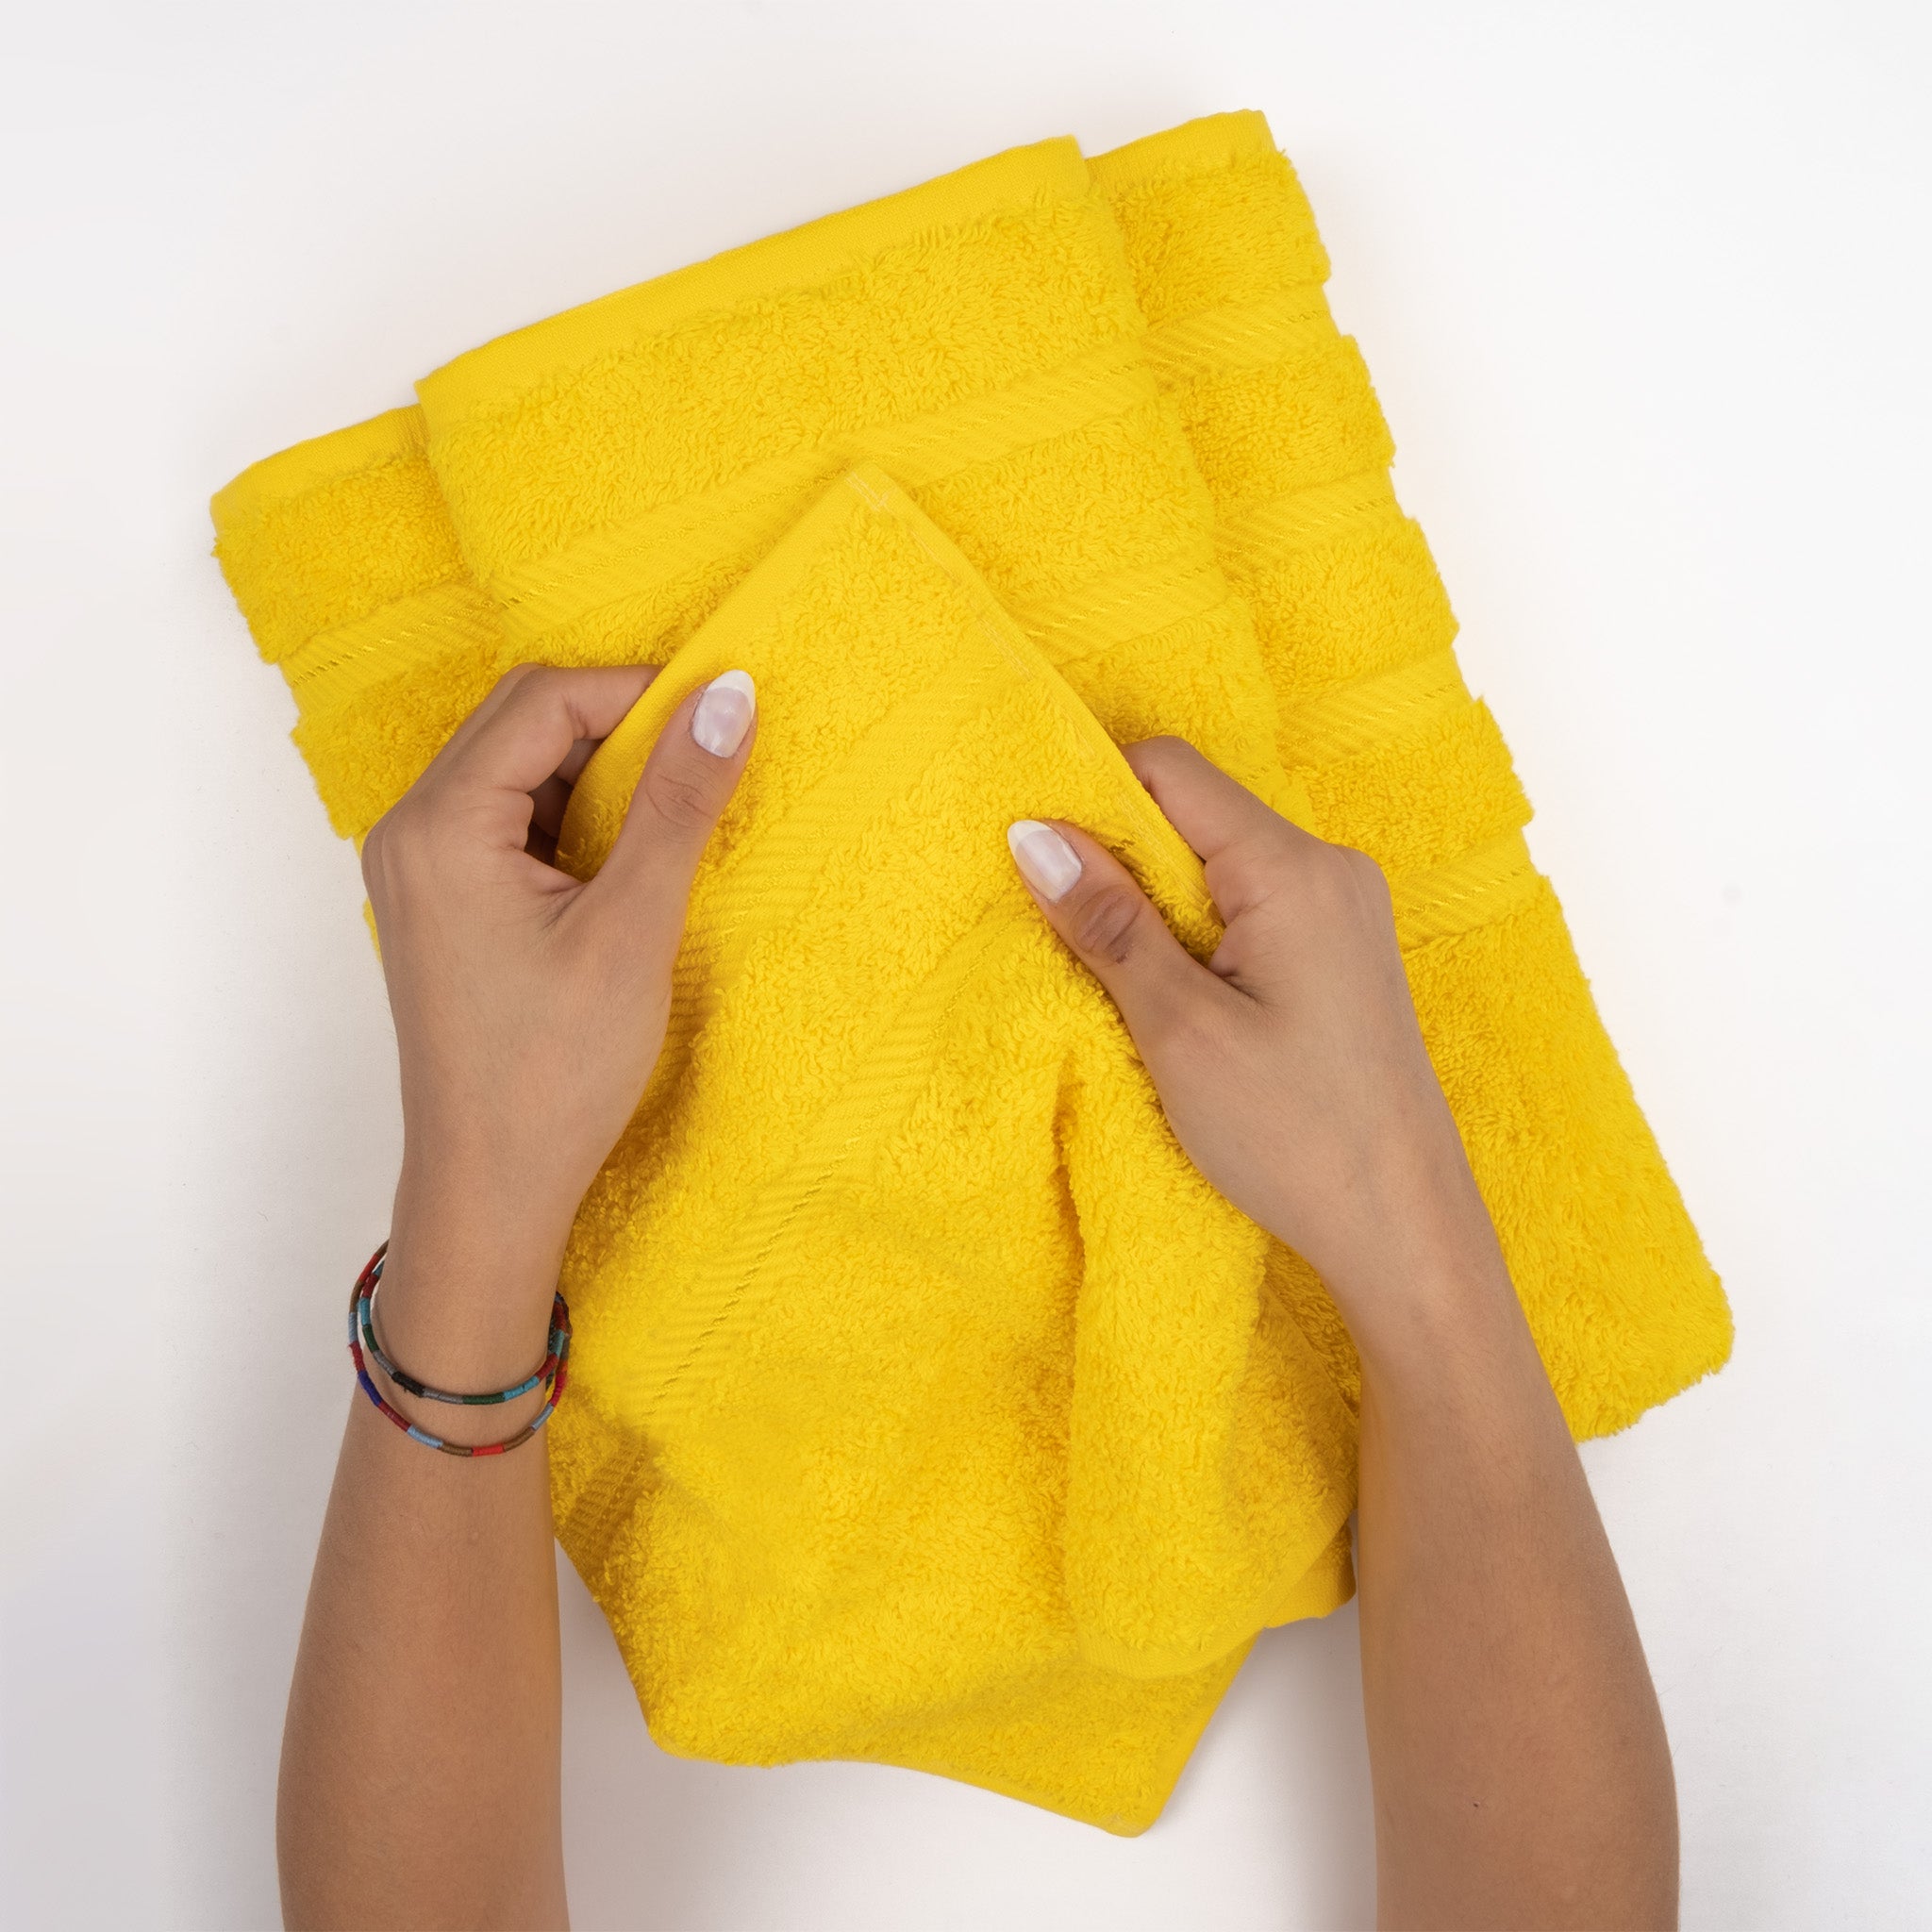  American Soft Linen 100% Turkish Cotton 4 Pack Hand Towel Set  yellow-5